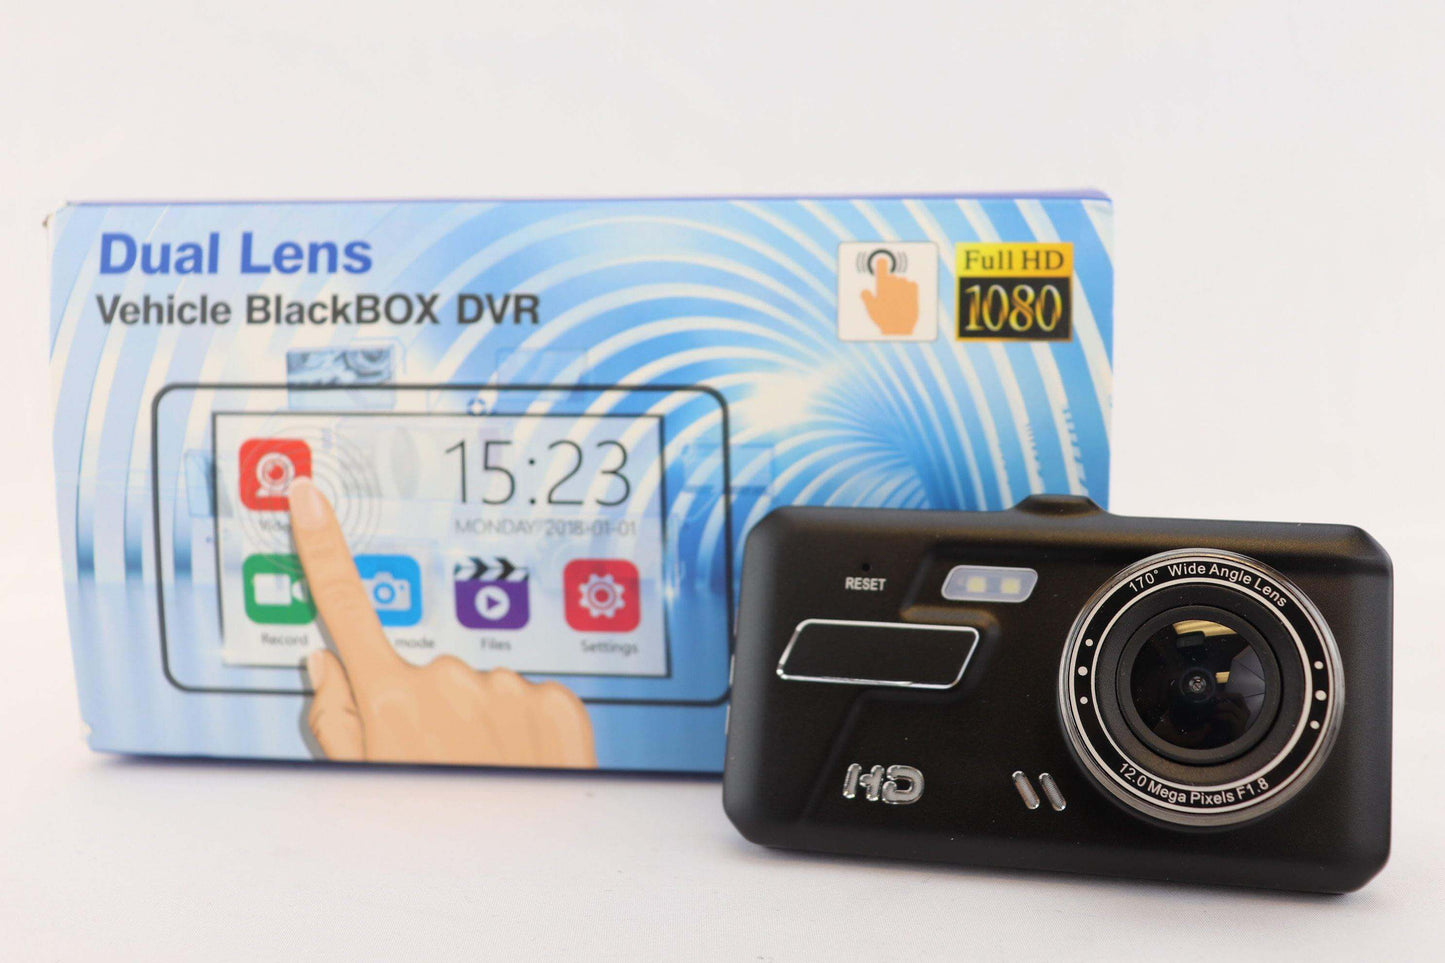 Dual Lens Vehicle BlackBox DVR - Open Box